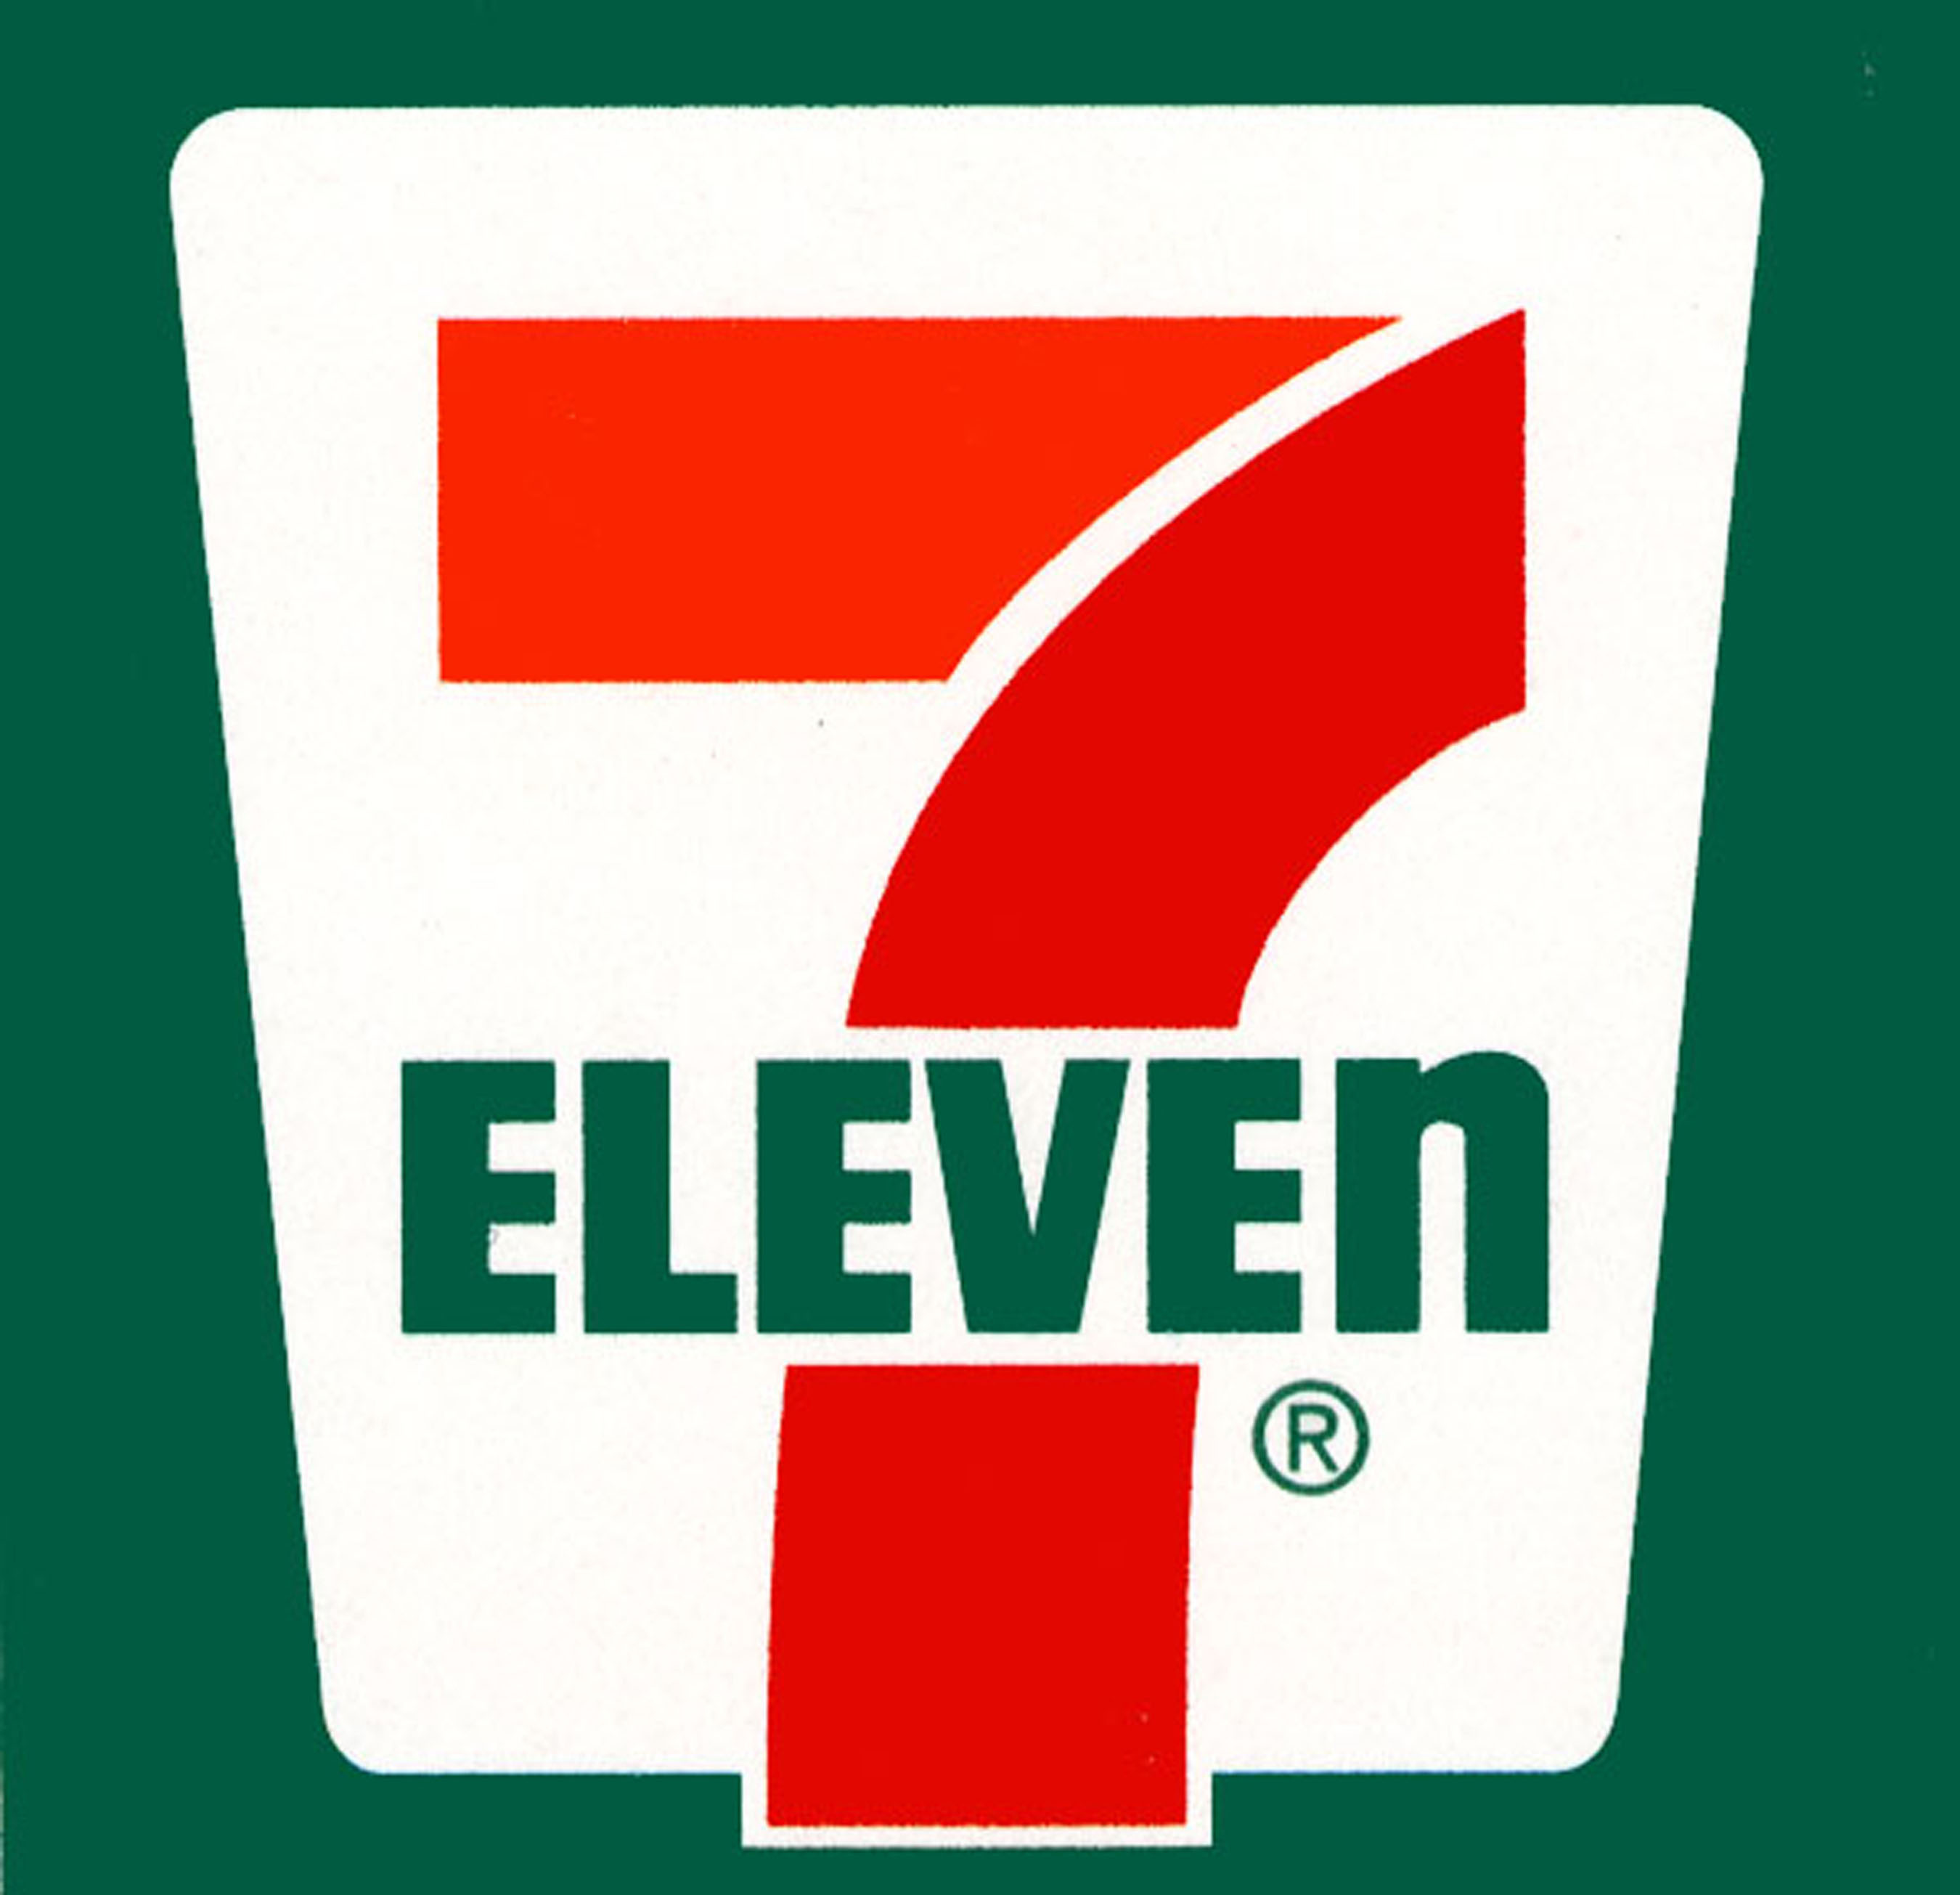 7-Eleven, Inc. logo. (PRNewsFoto/7-Eleven, Inc.) (PRNewsFoto/)